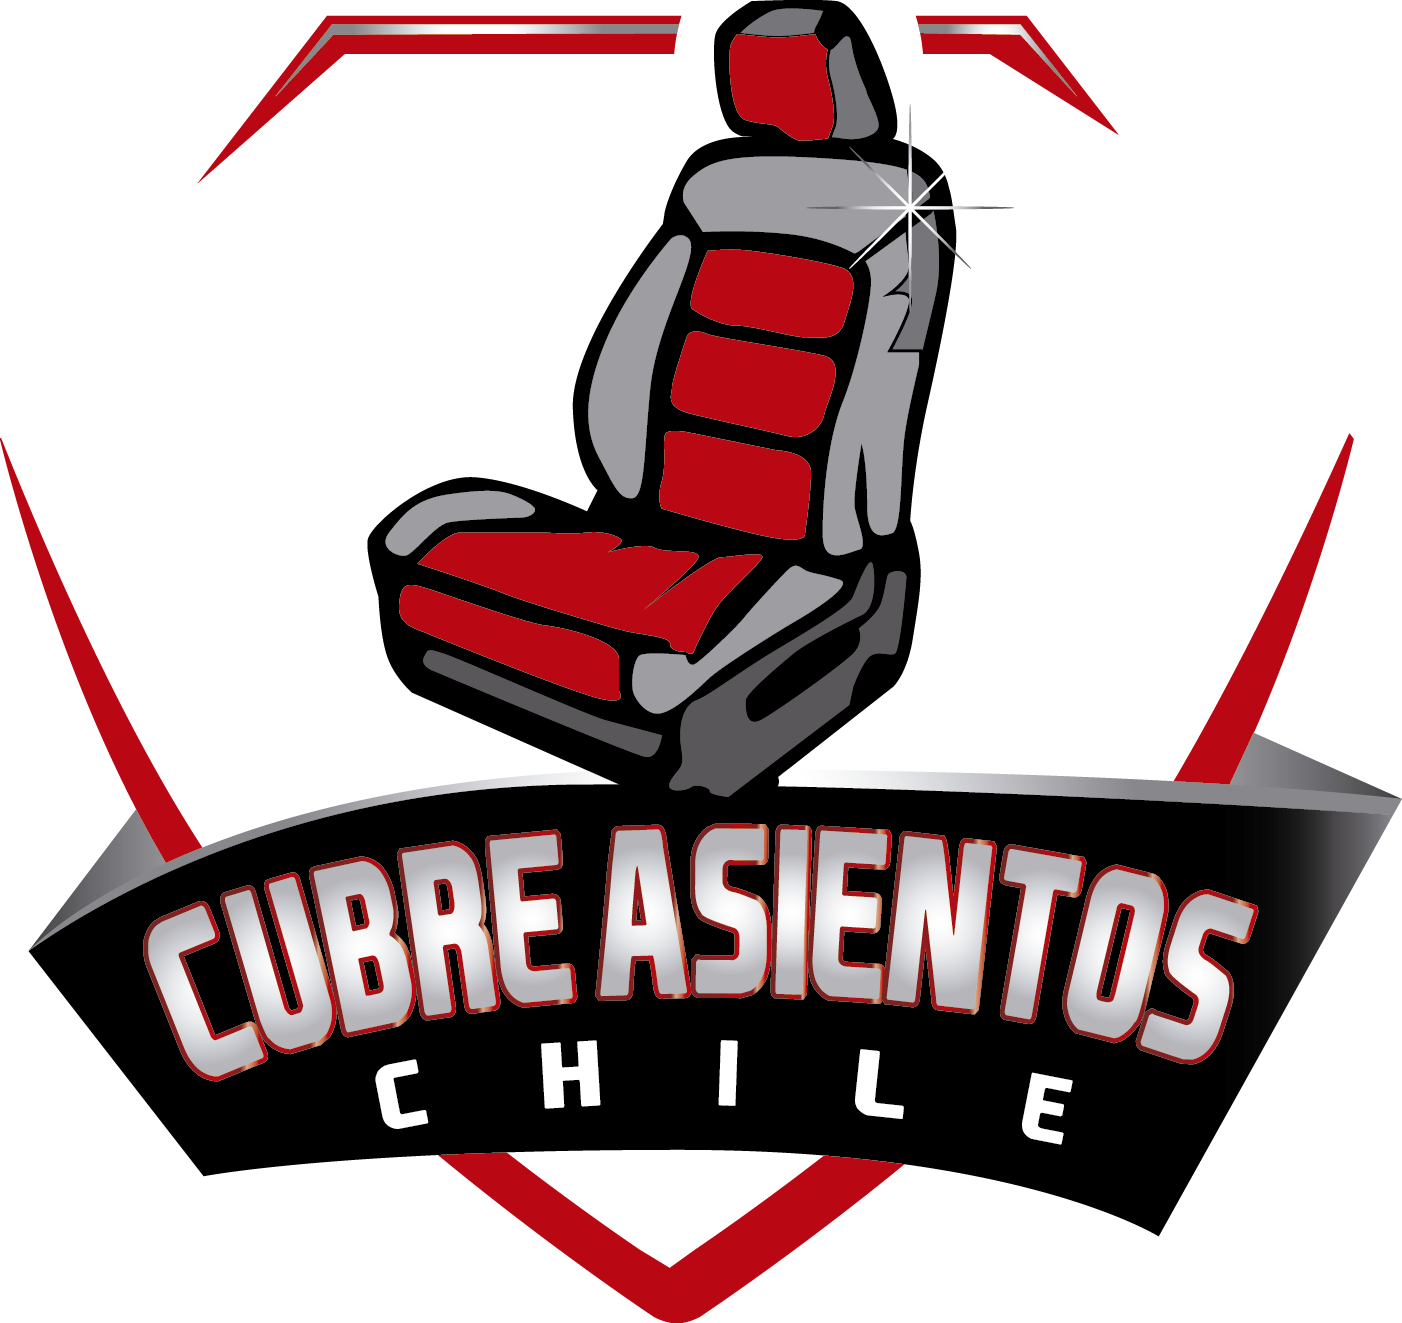 Cubreasientos Chile